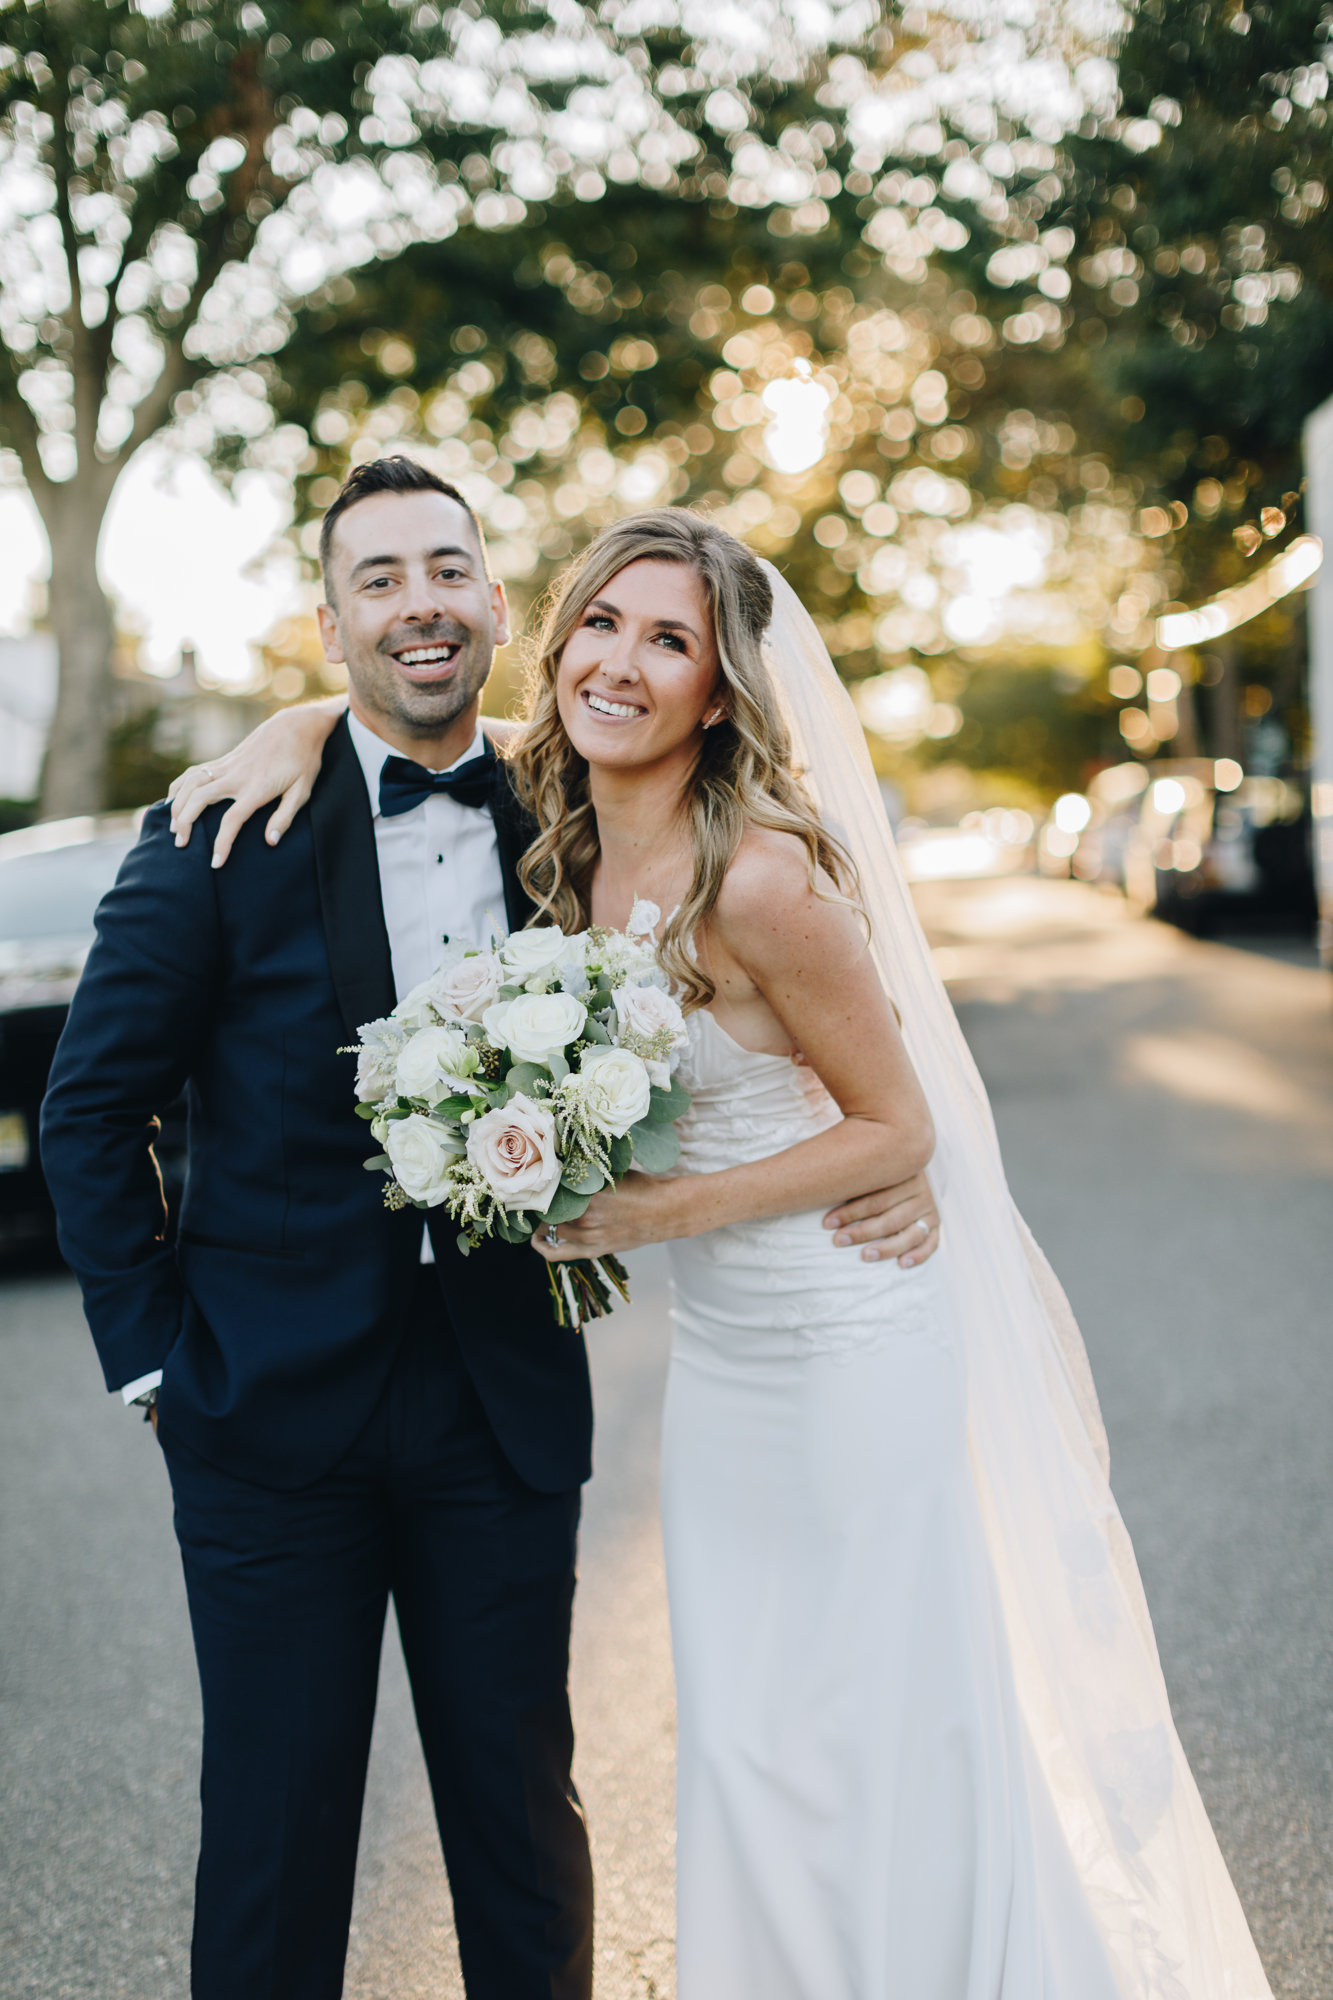 Long Island wedding photographer taking golden hour portraits